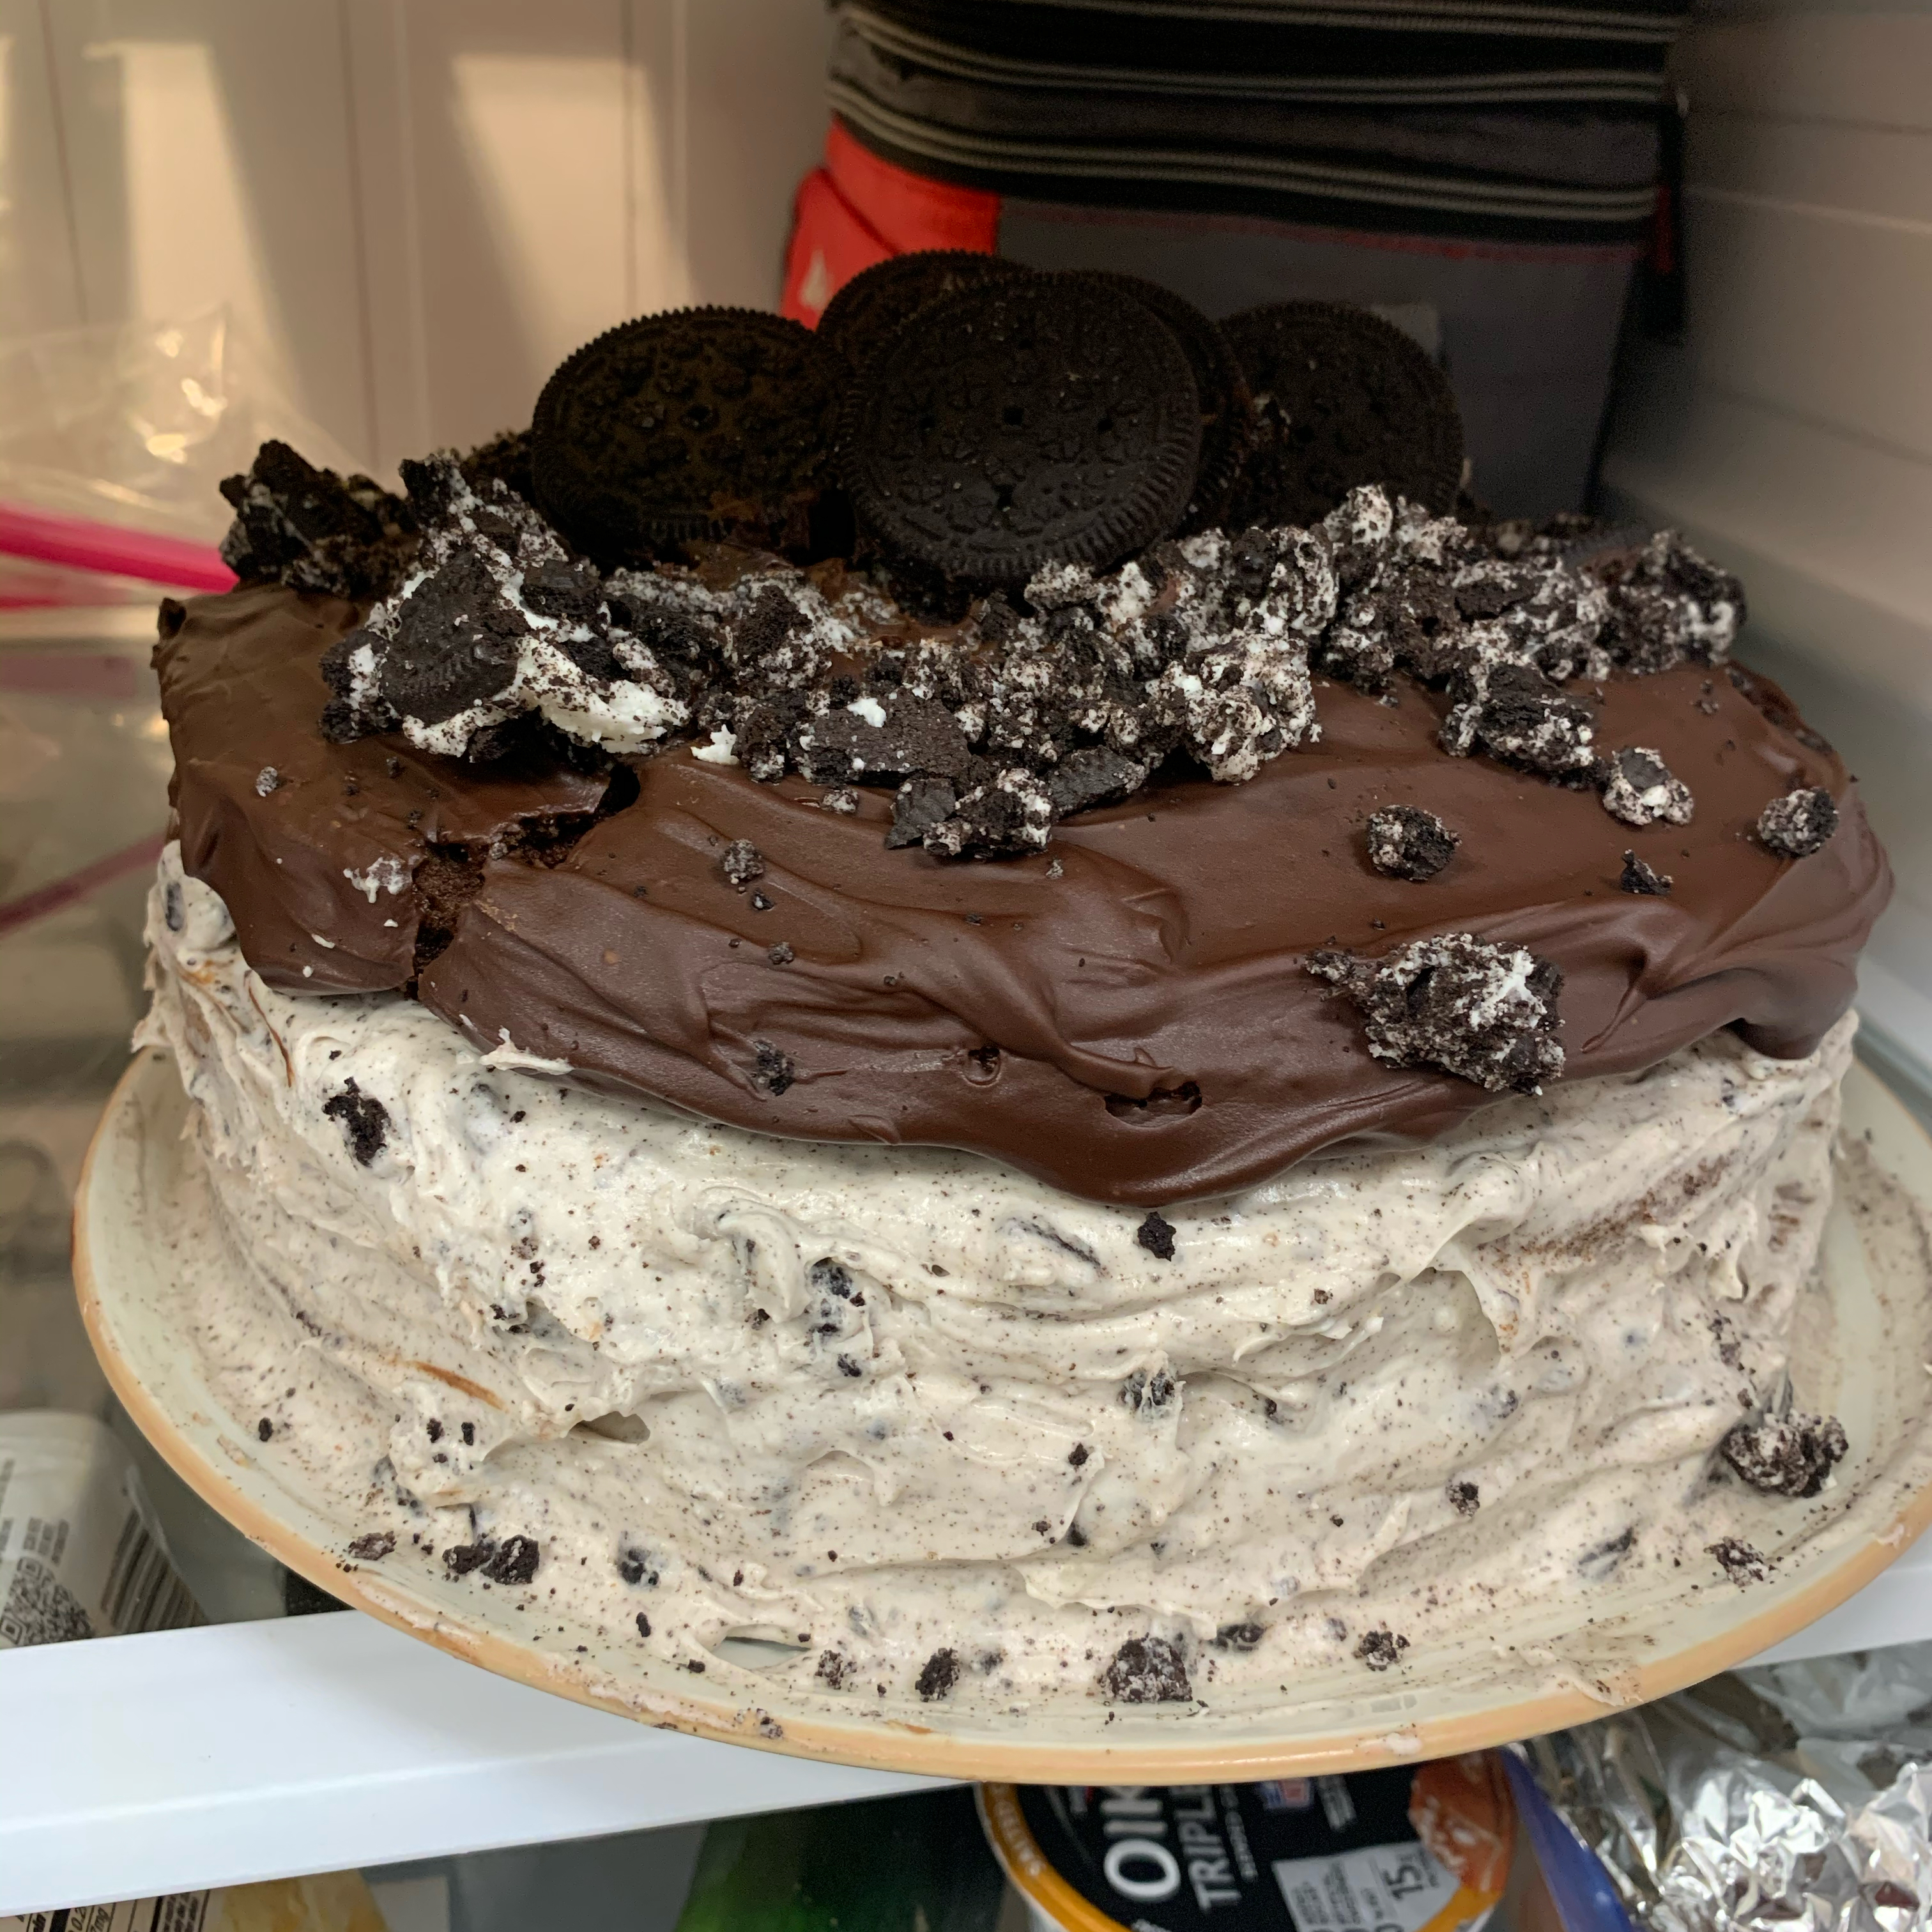 Giant OREO Cookie Cake 